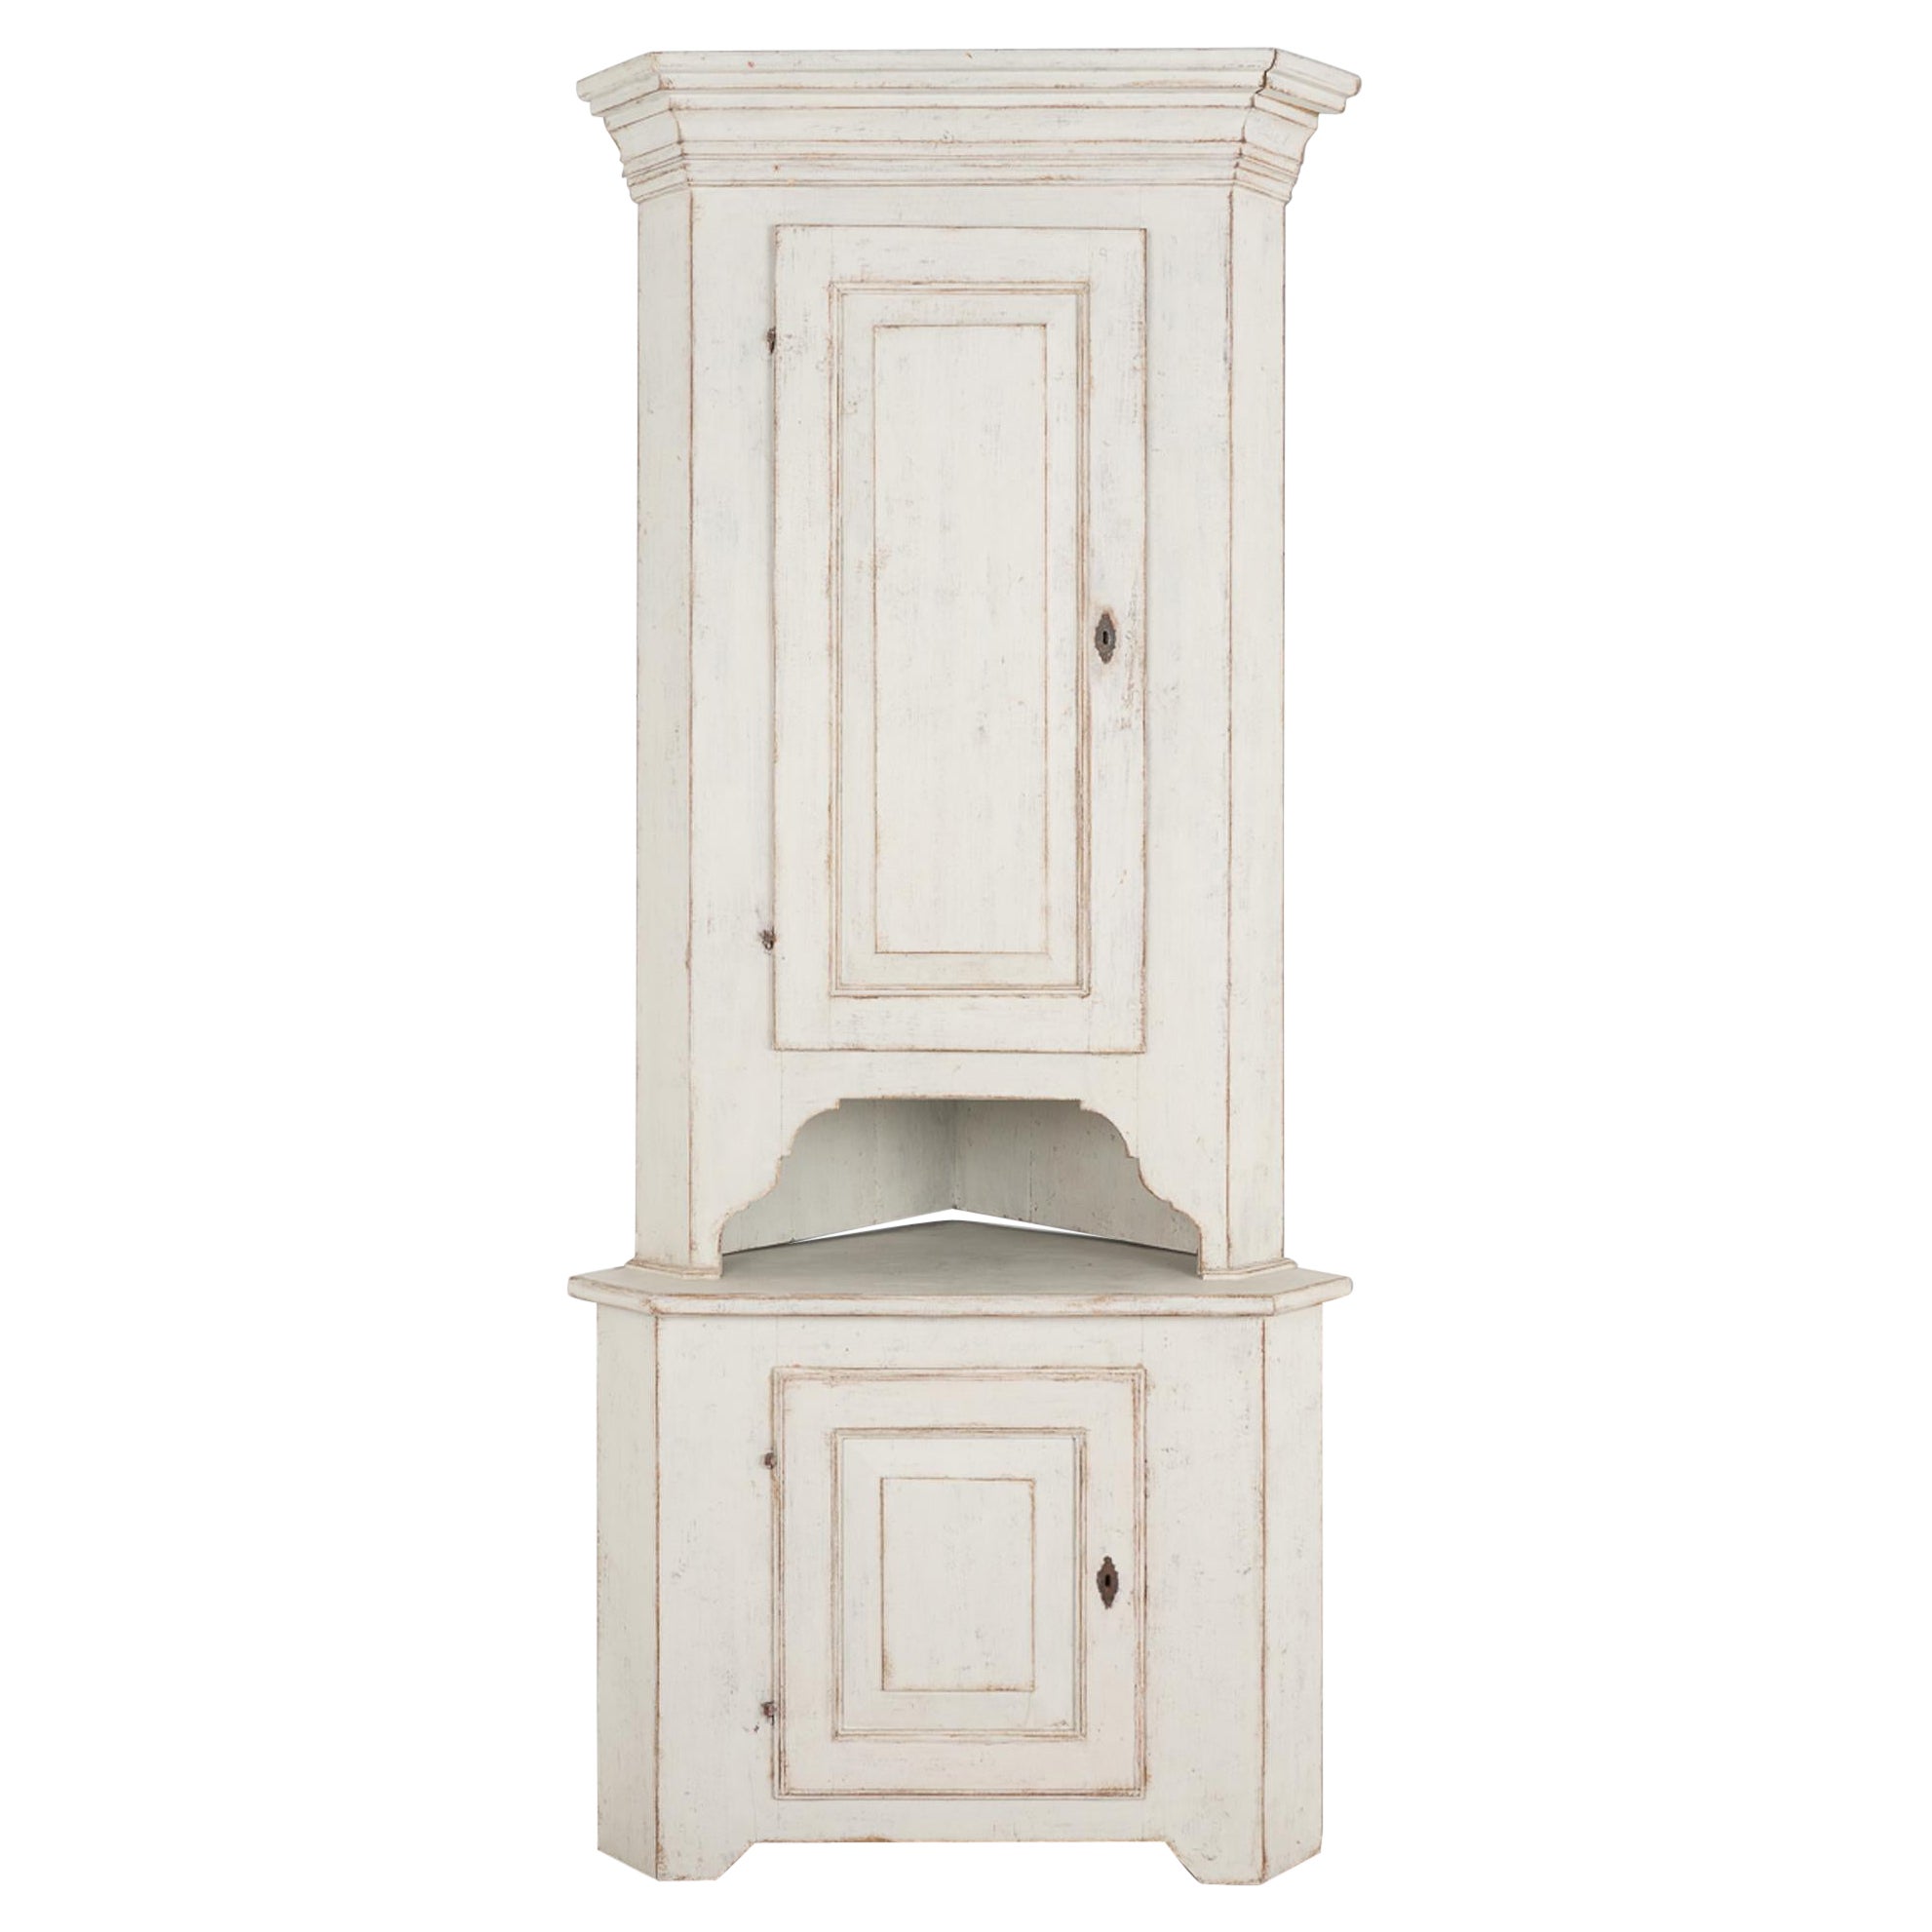 Tall White Corner Cabinet Cupboard, Sweden circa 1820-40 For Sale